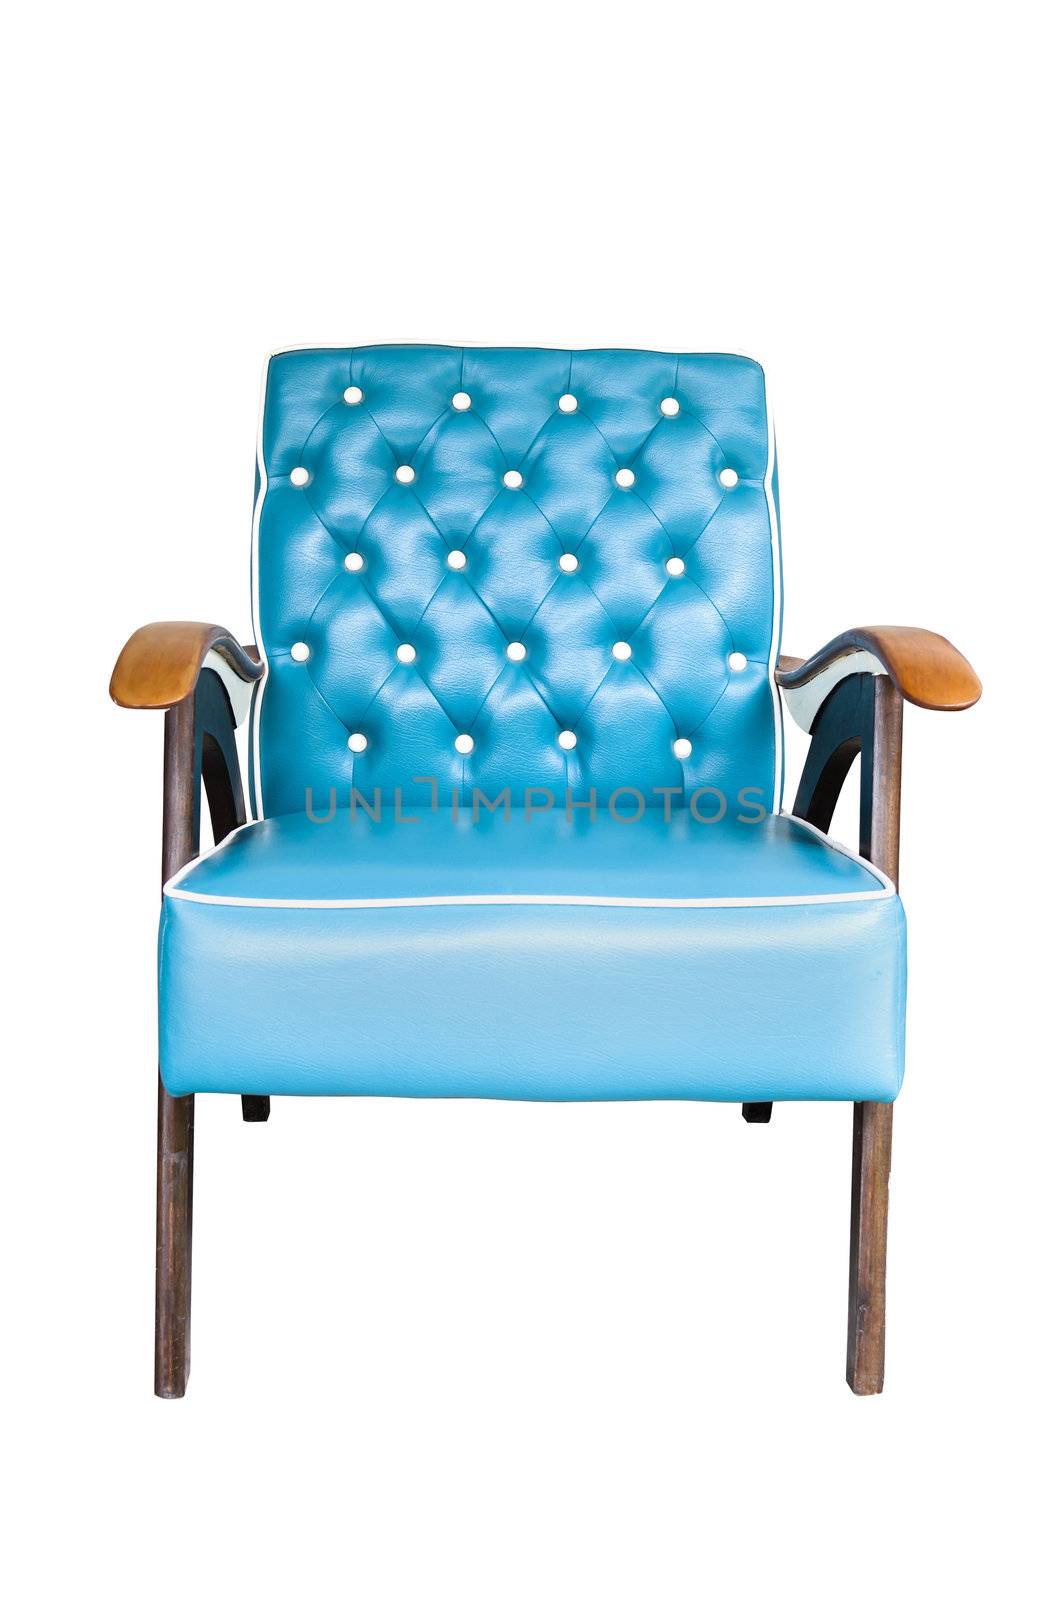 Blue vintage arm chair by TanawatPontchour